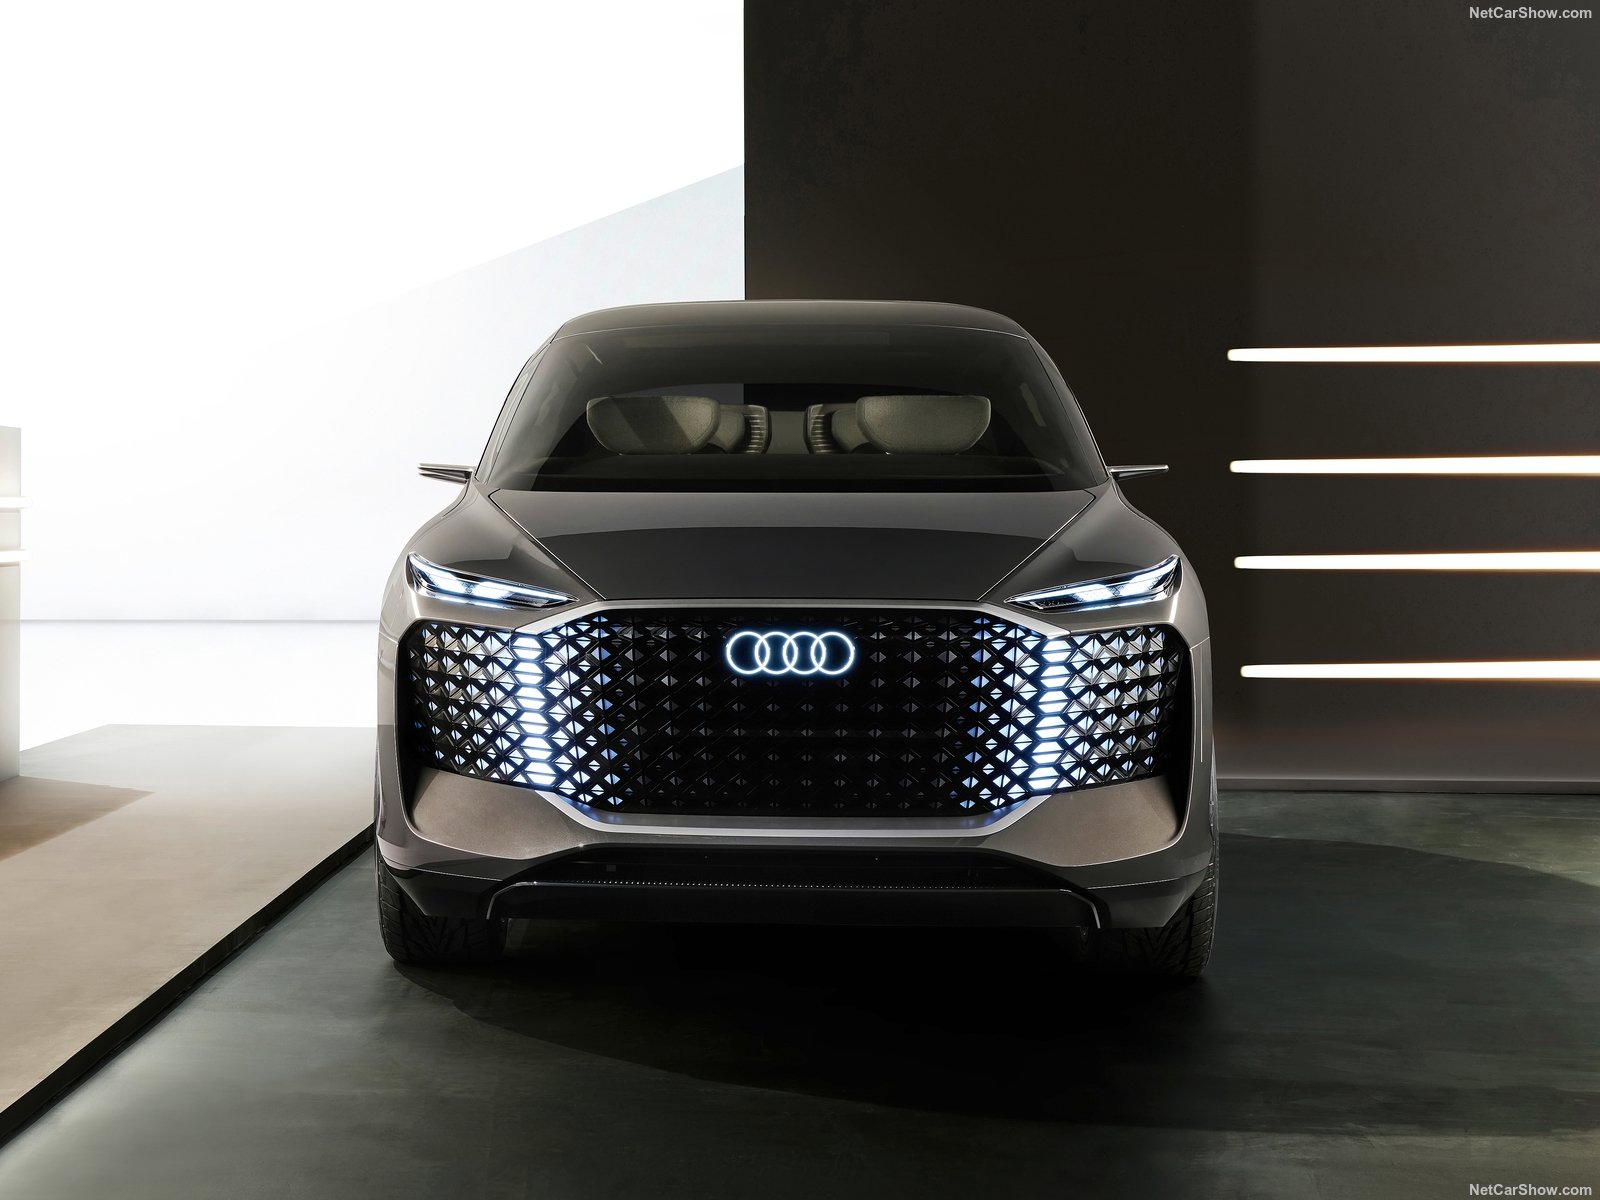 Audi urbansphere: Tο όραμα για το μέλλον των αστικών μετακινήσεων 